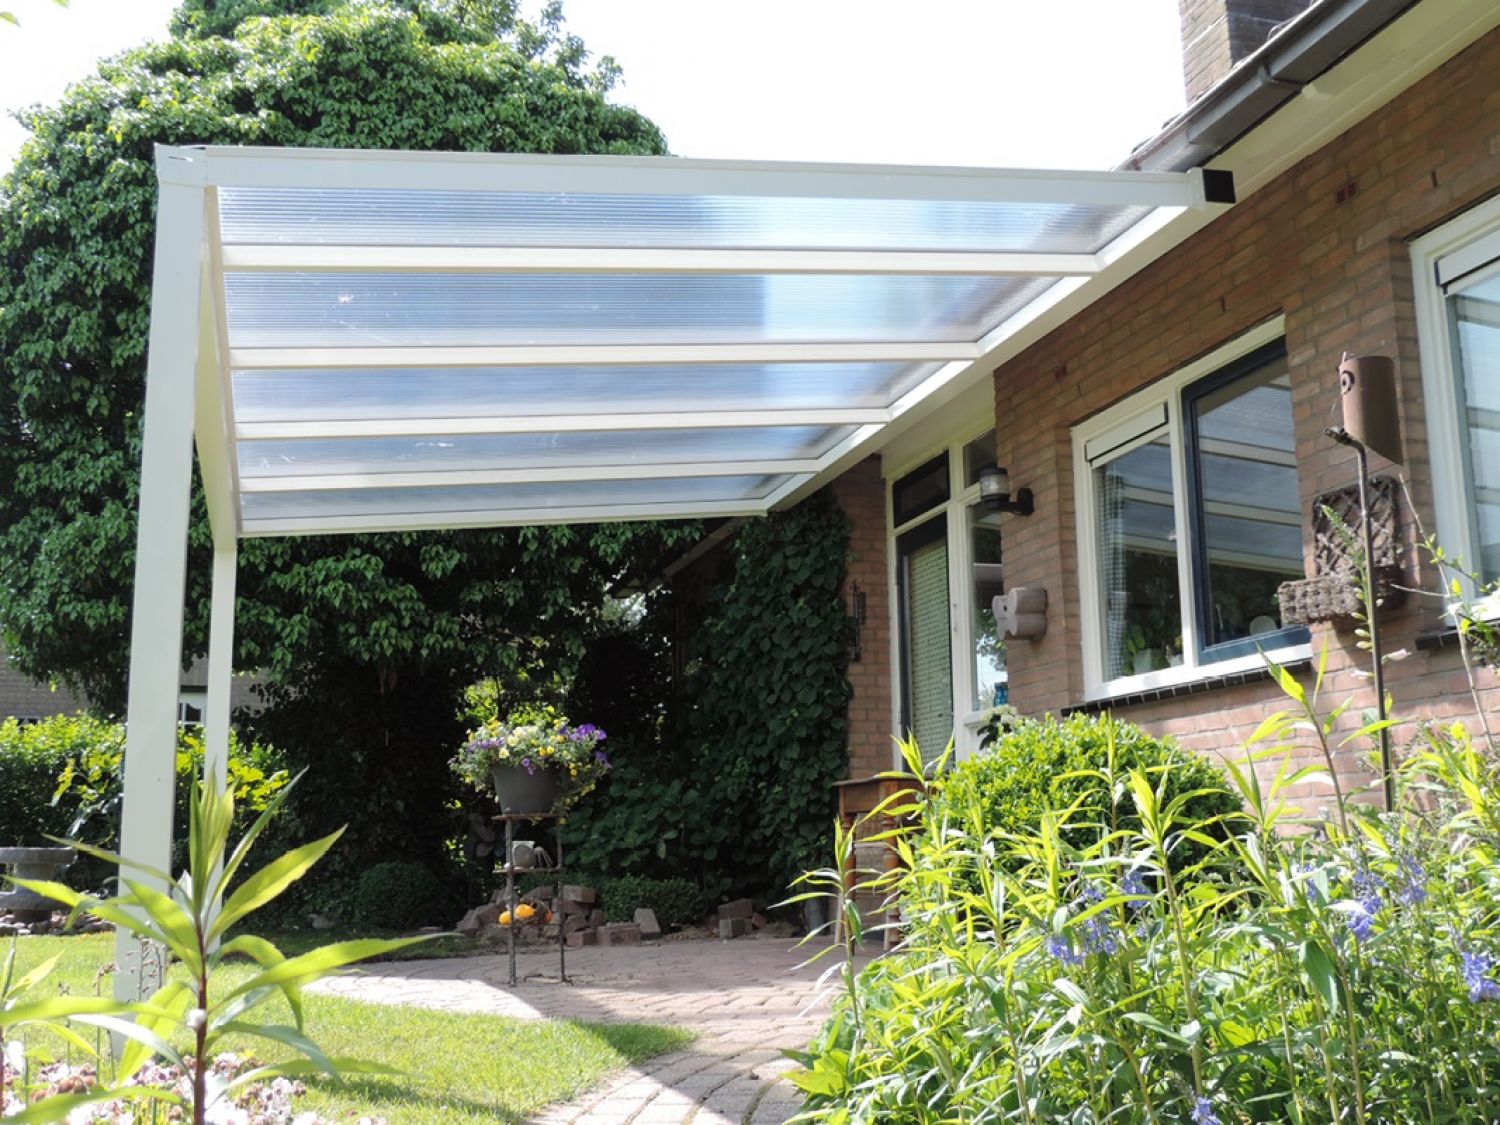 Greenline veranda 400x250 cm - polycarbonaat dak